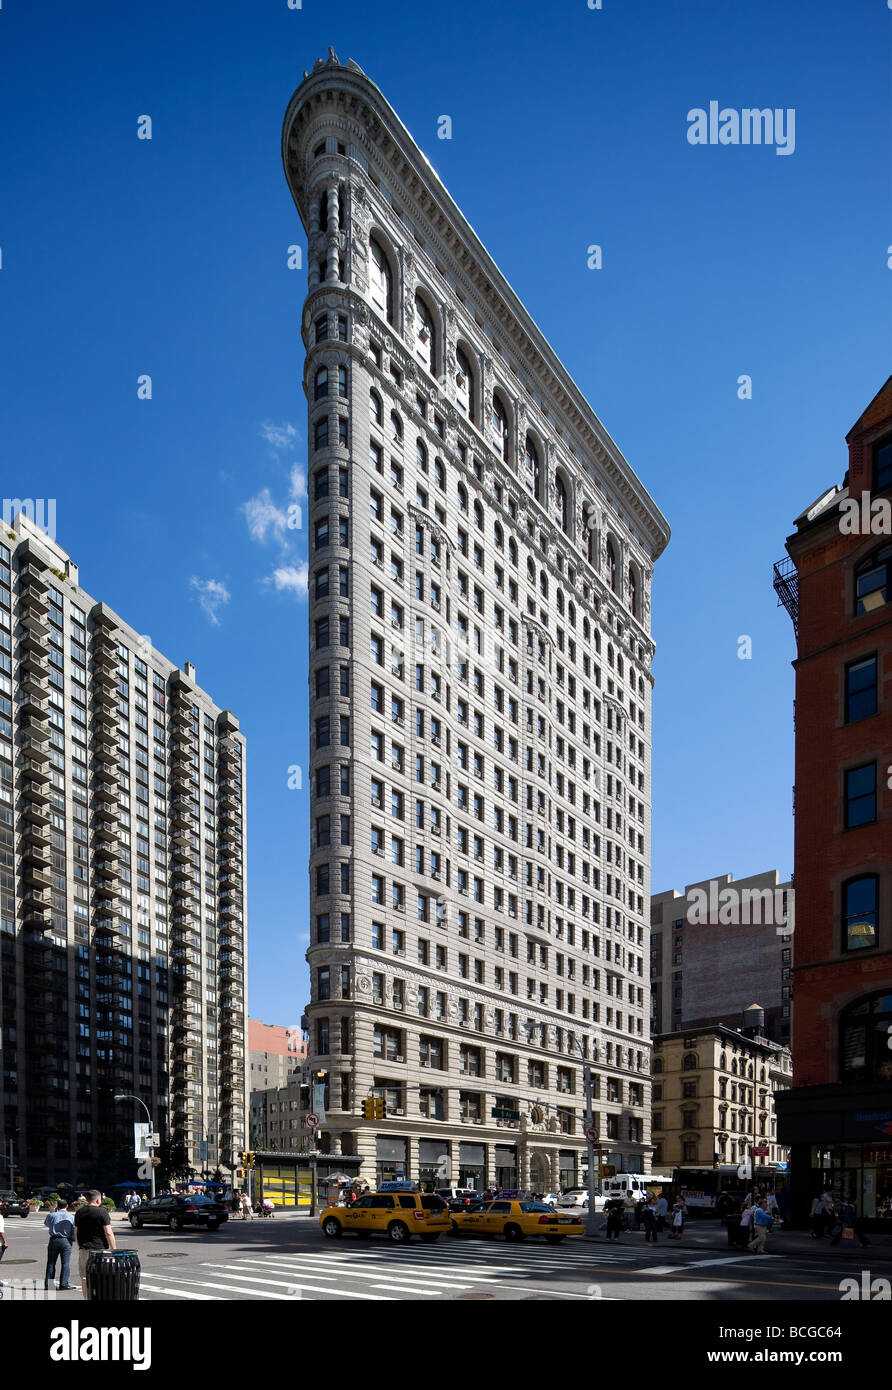 The Flatiron Building, New York City, NY Stock Photo - Alamy